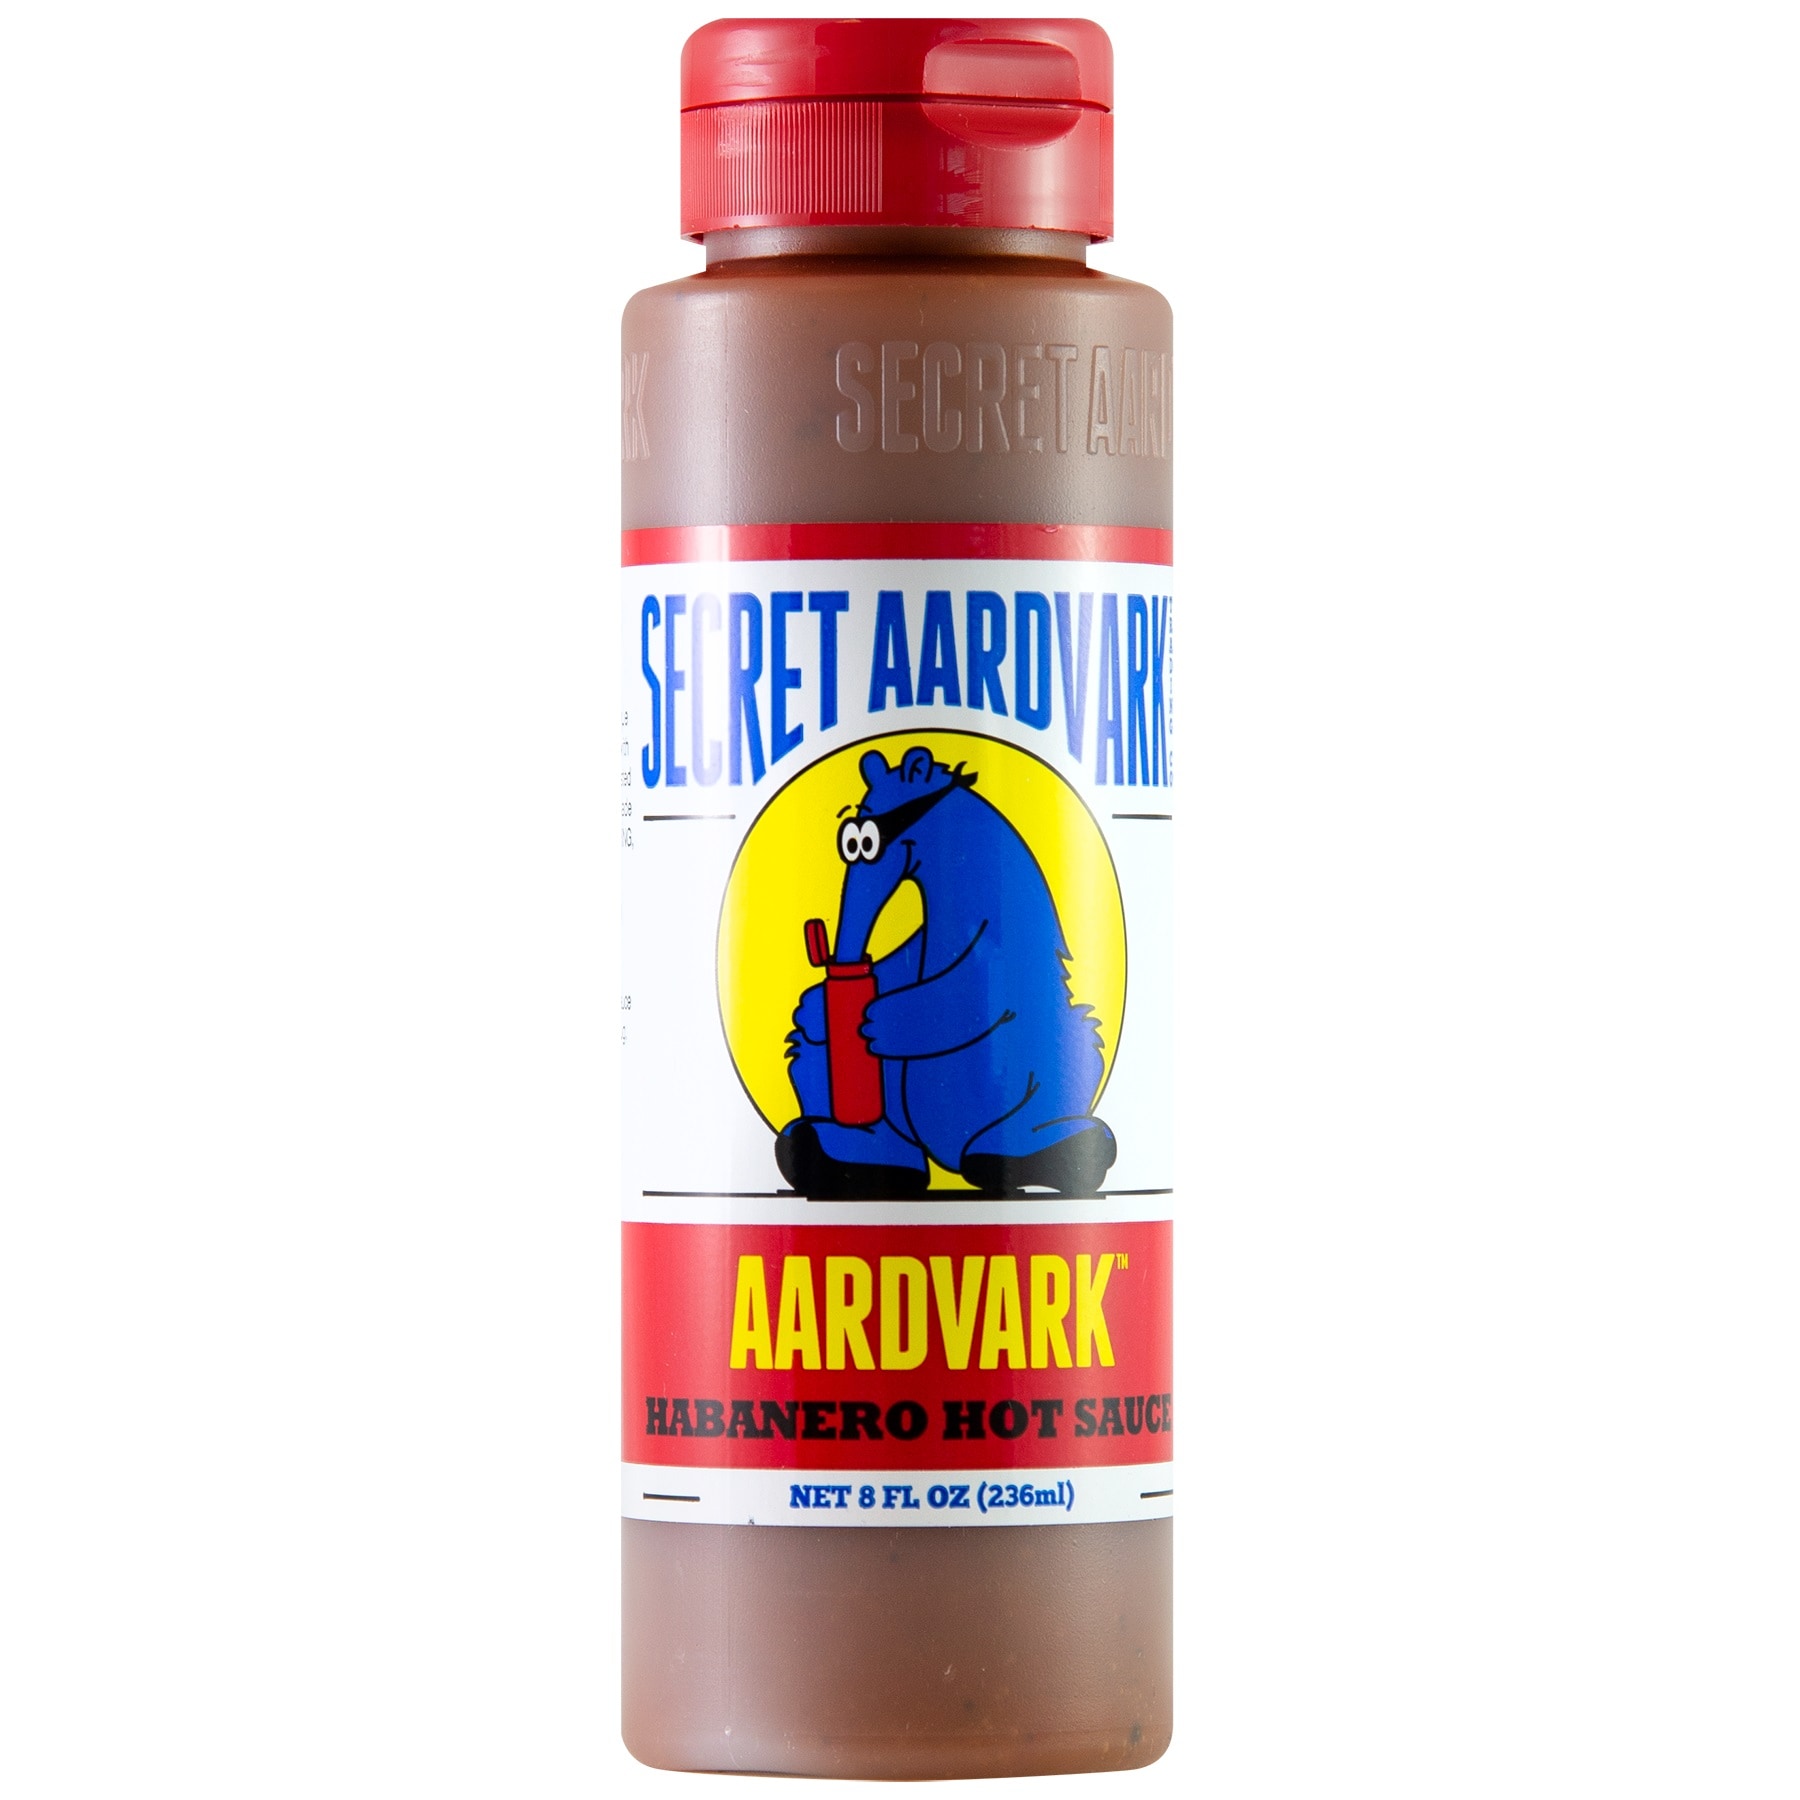 Louisiana Brand The Perfect Habanero Hot Sauce, 3 fl oz 